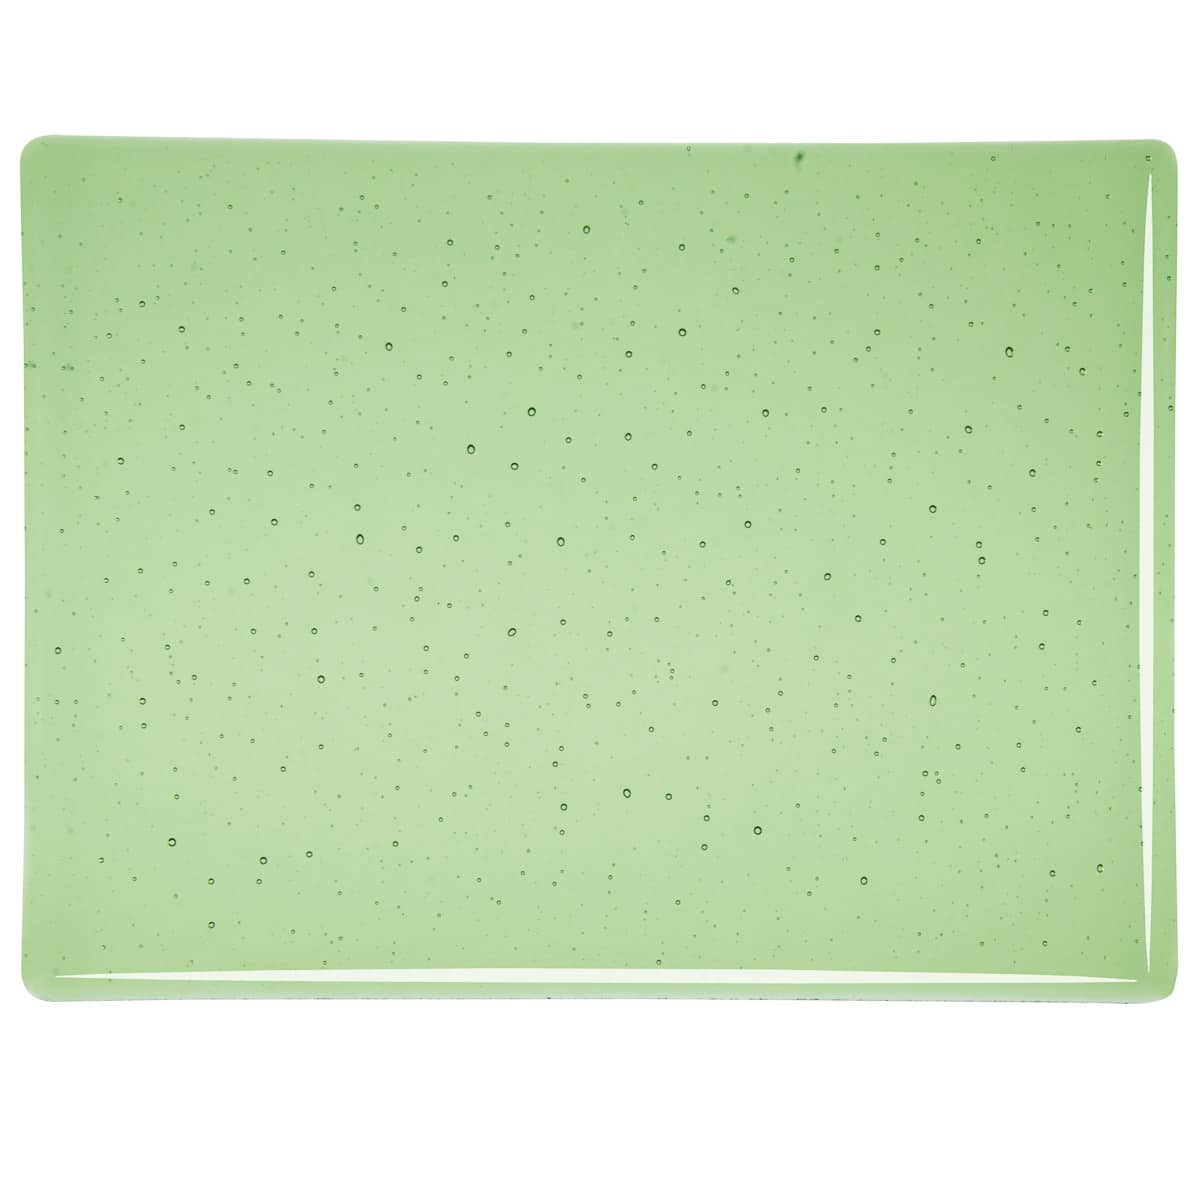 001217 Transparent Leaf Green sheet glass swatch